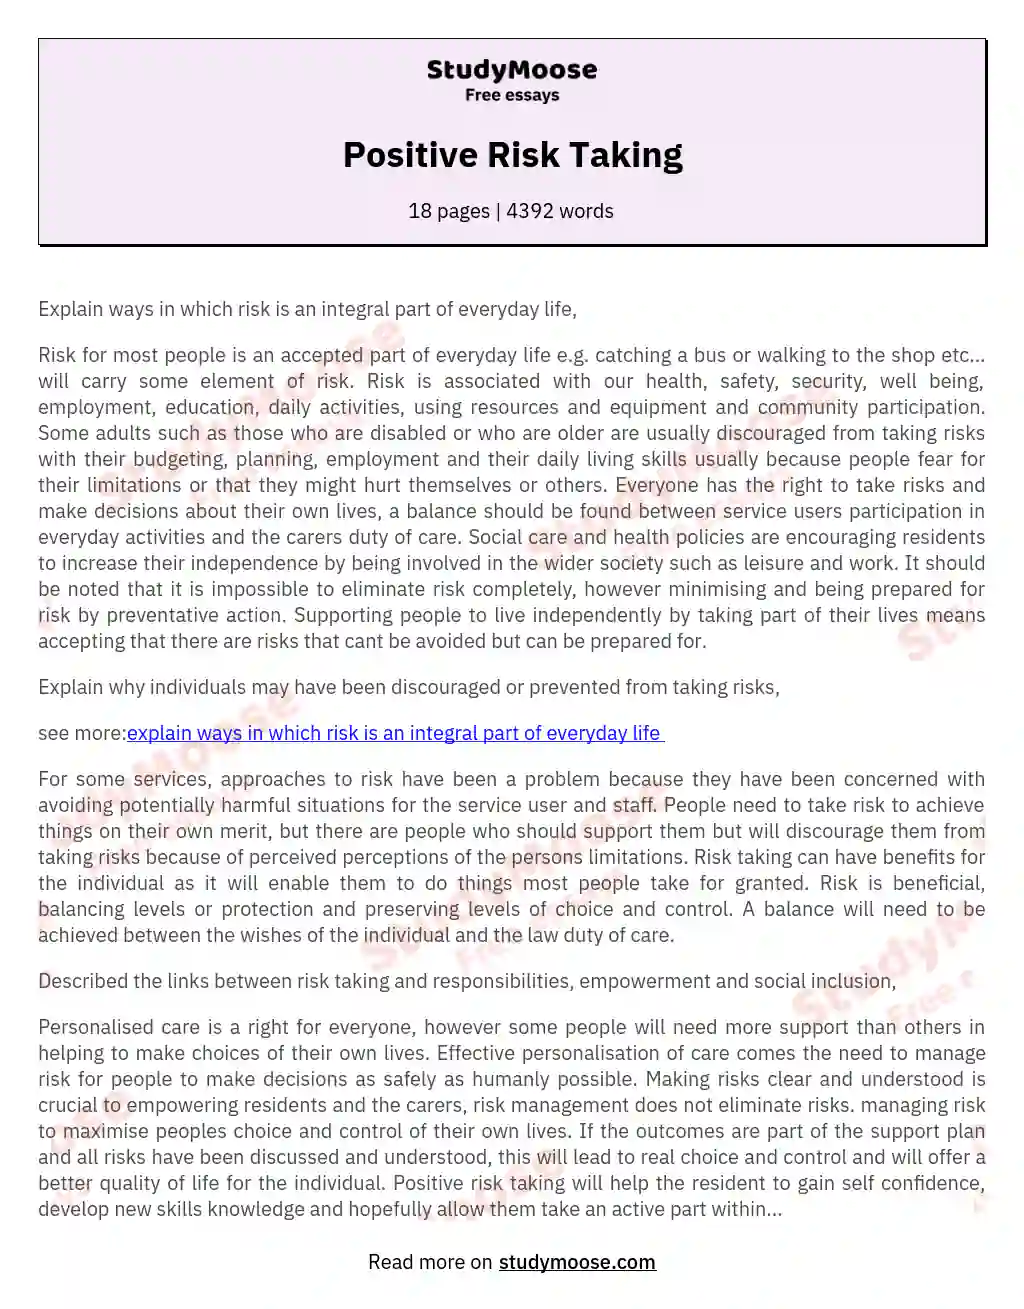 Positive Risk Taking essay